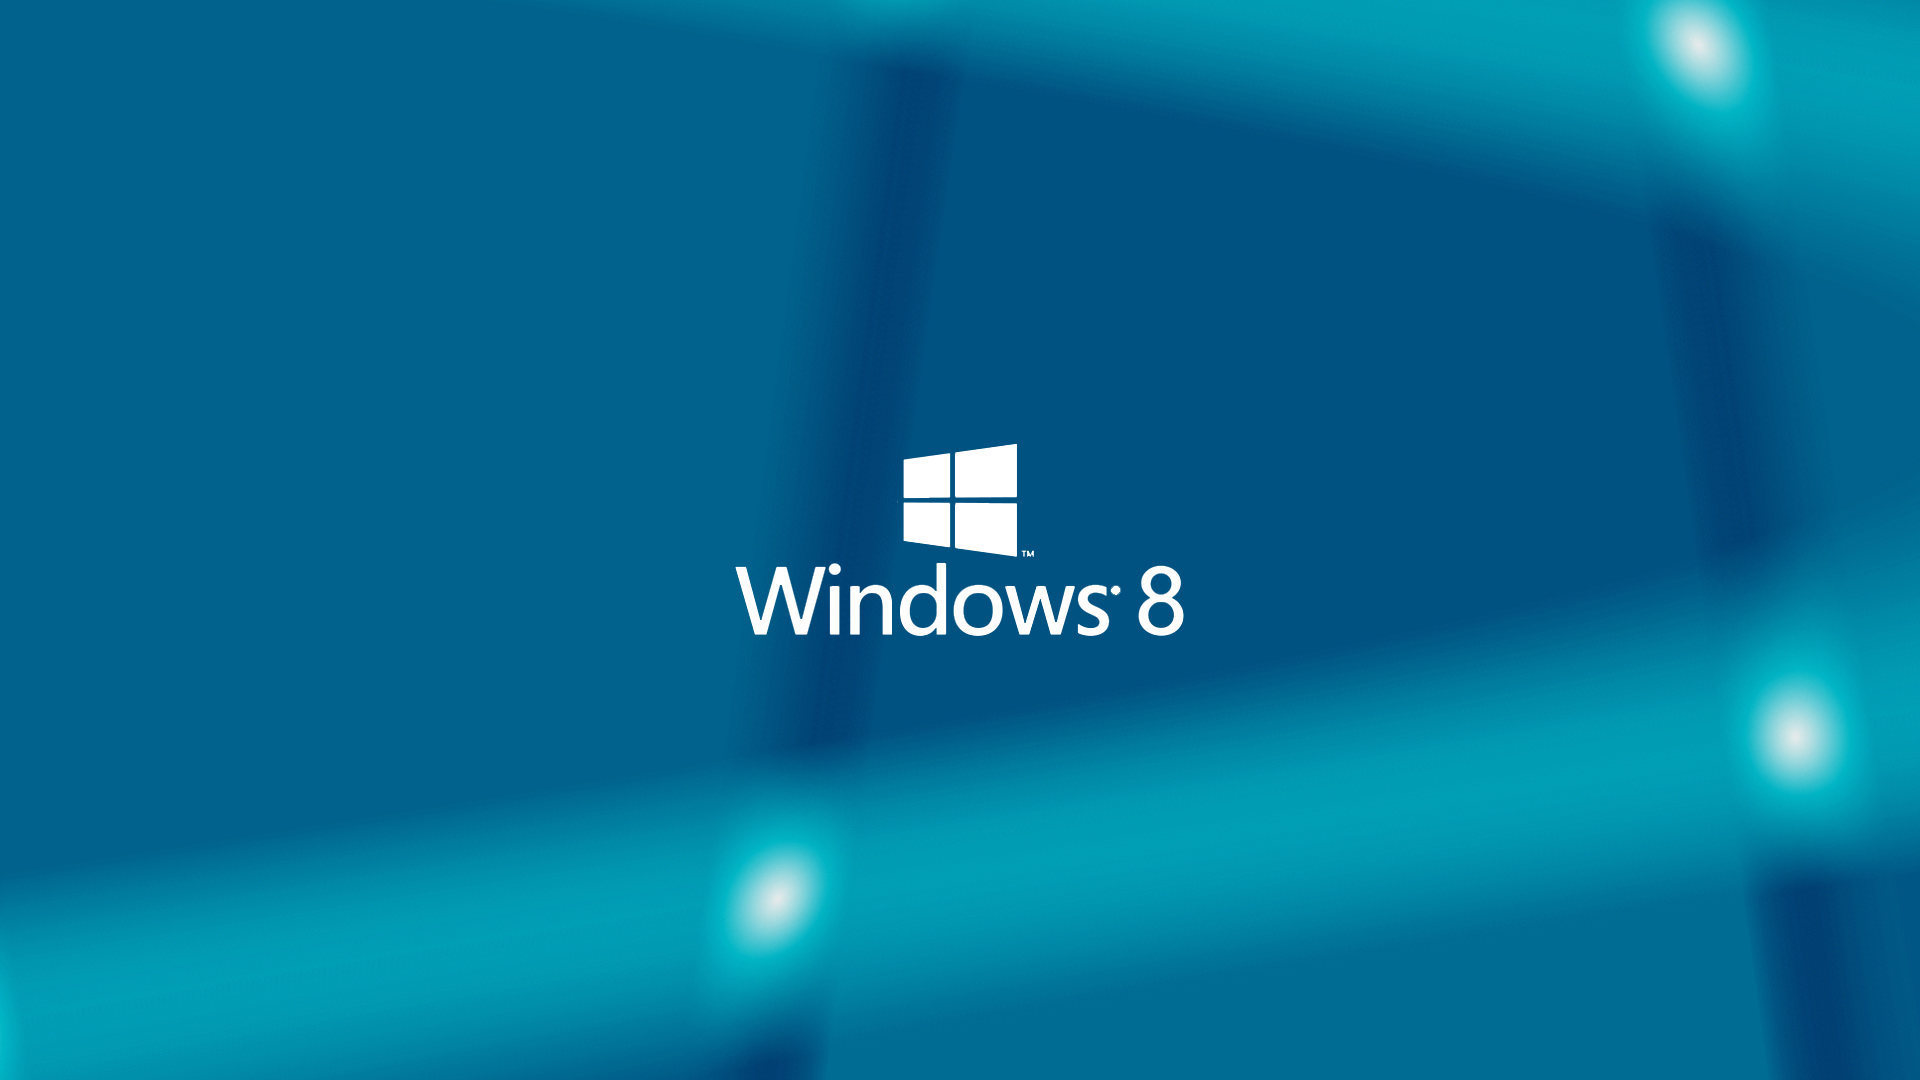 Windows 8 Wallpaper 480X800 wallpaper   1194476 1920x1080